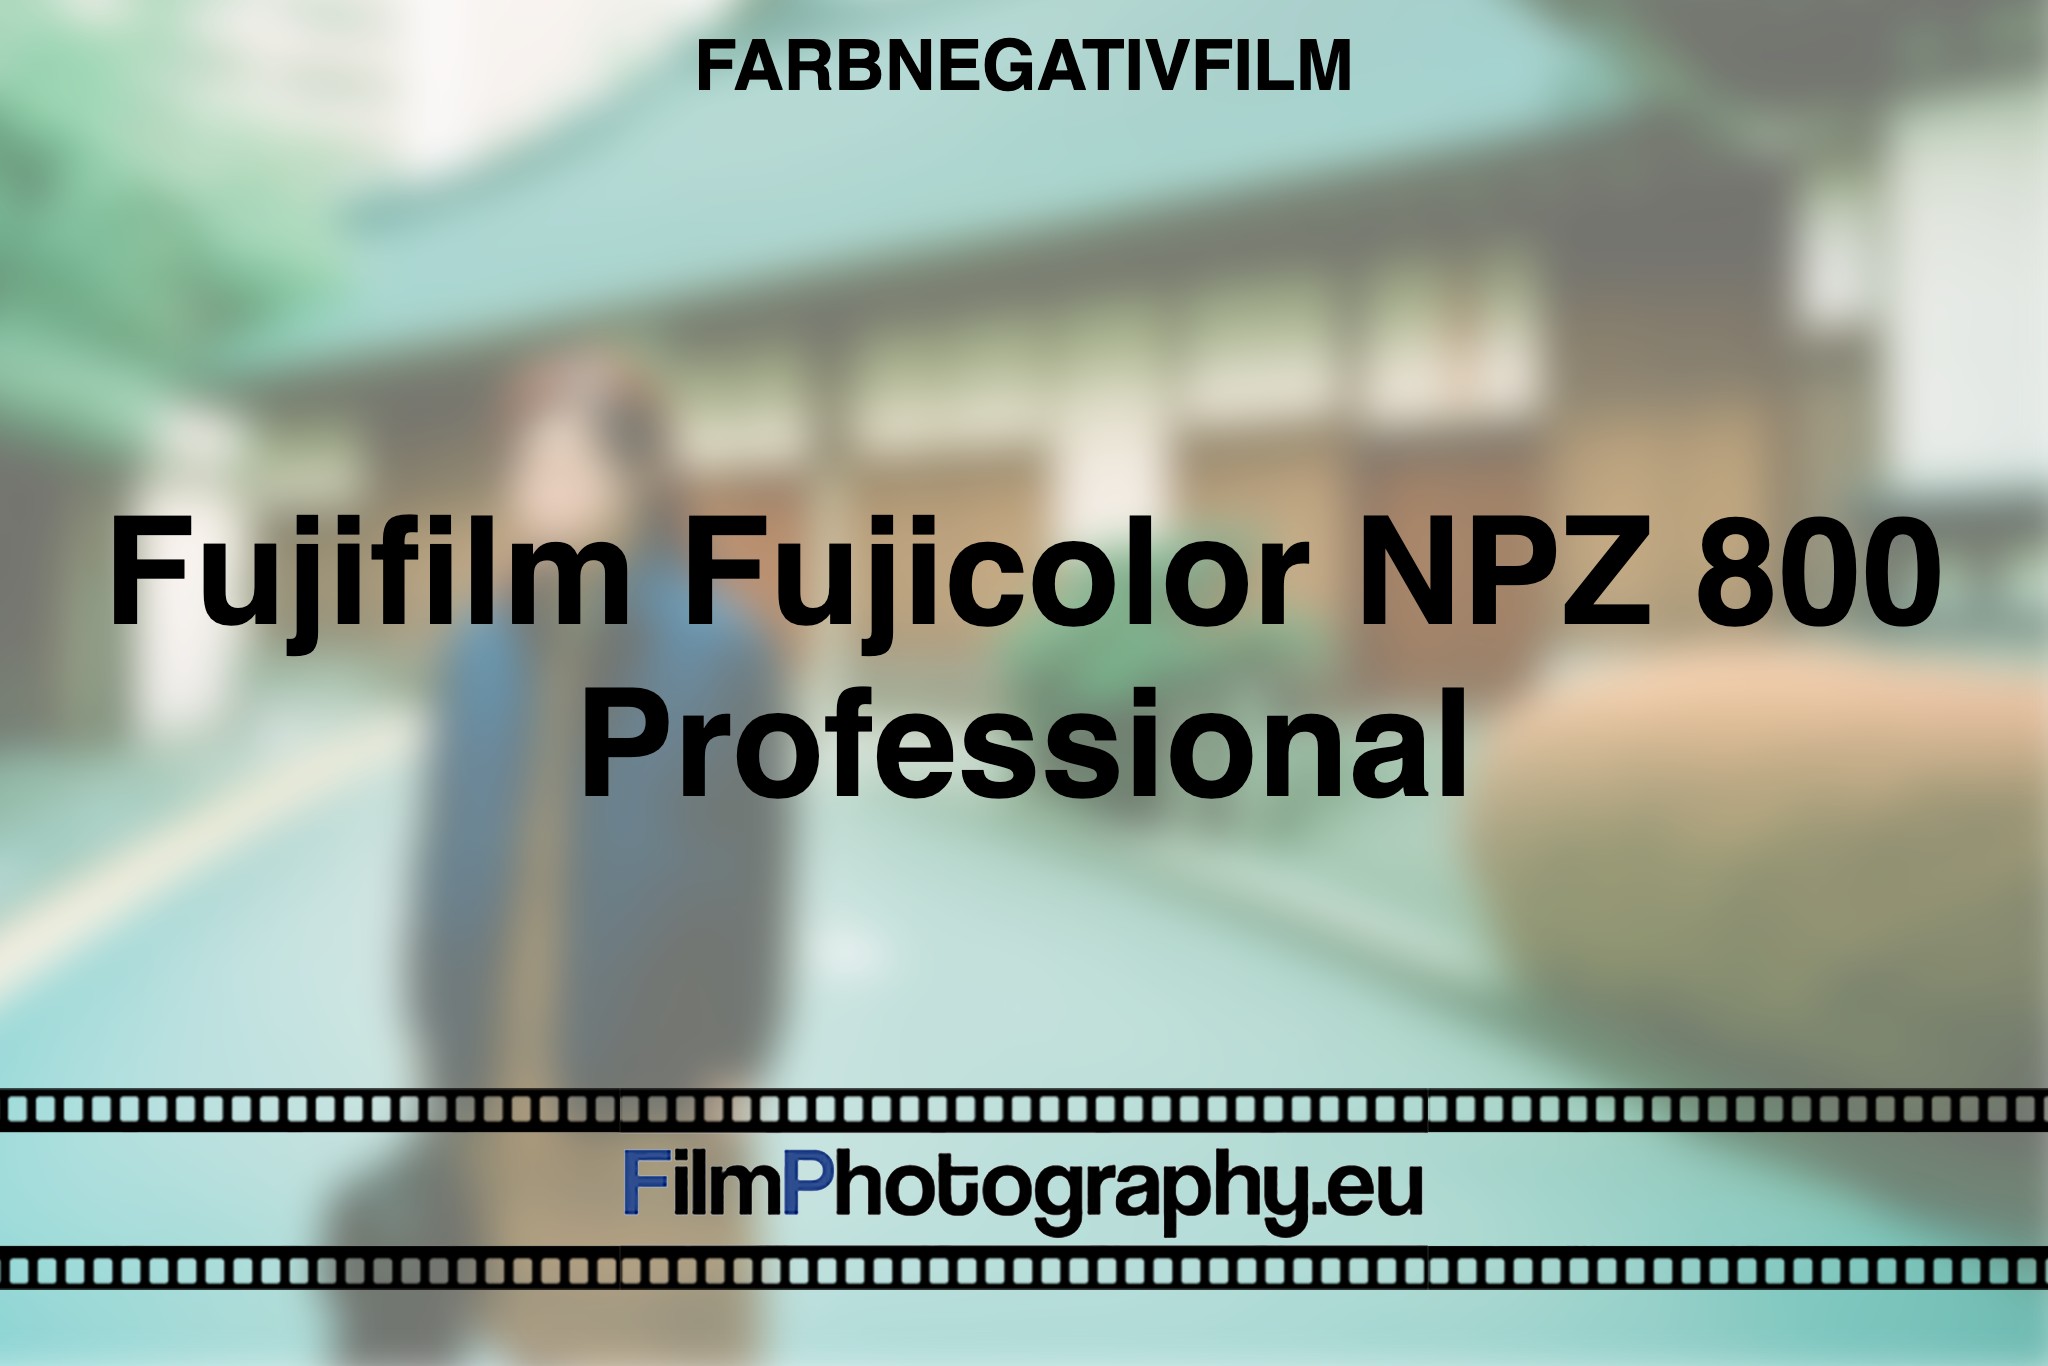 fujifilm-fujicolor-npz-800-professional-farbnegativfilm-bnv